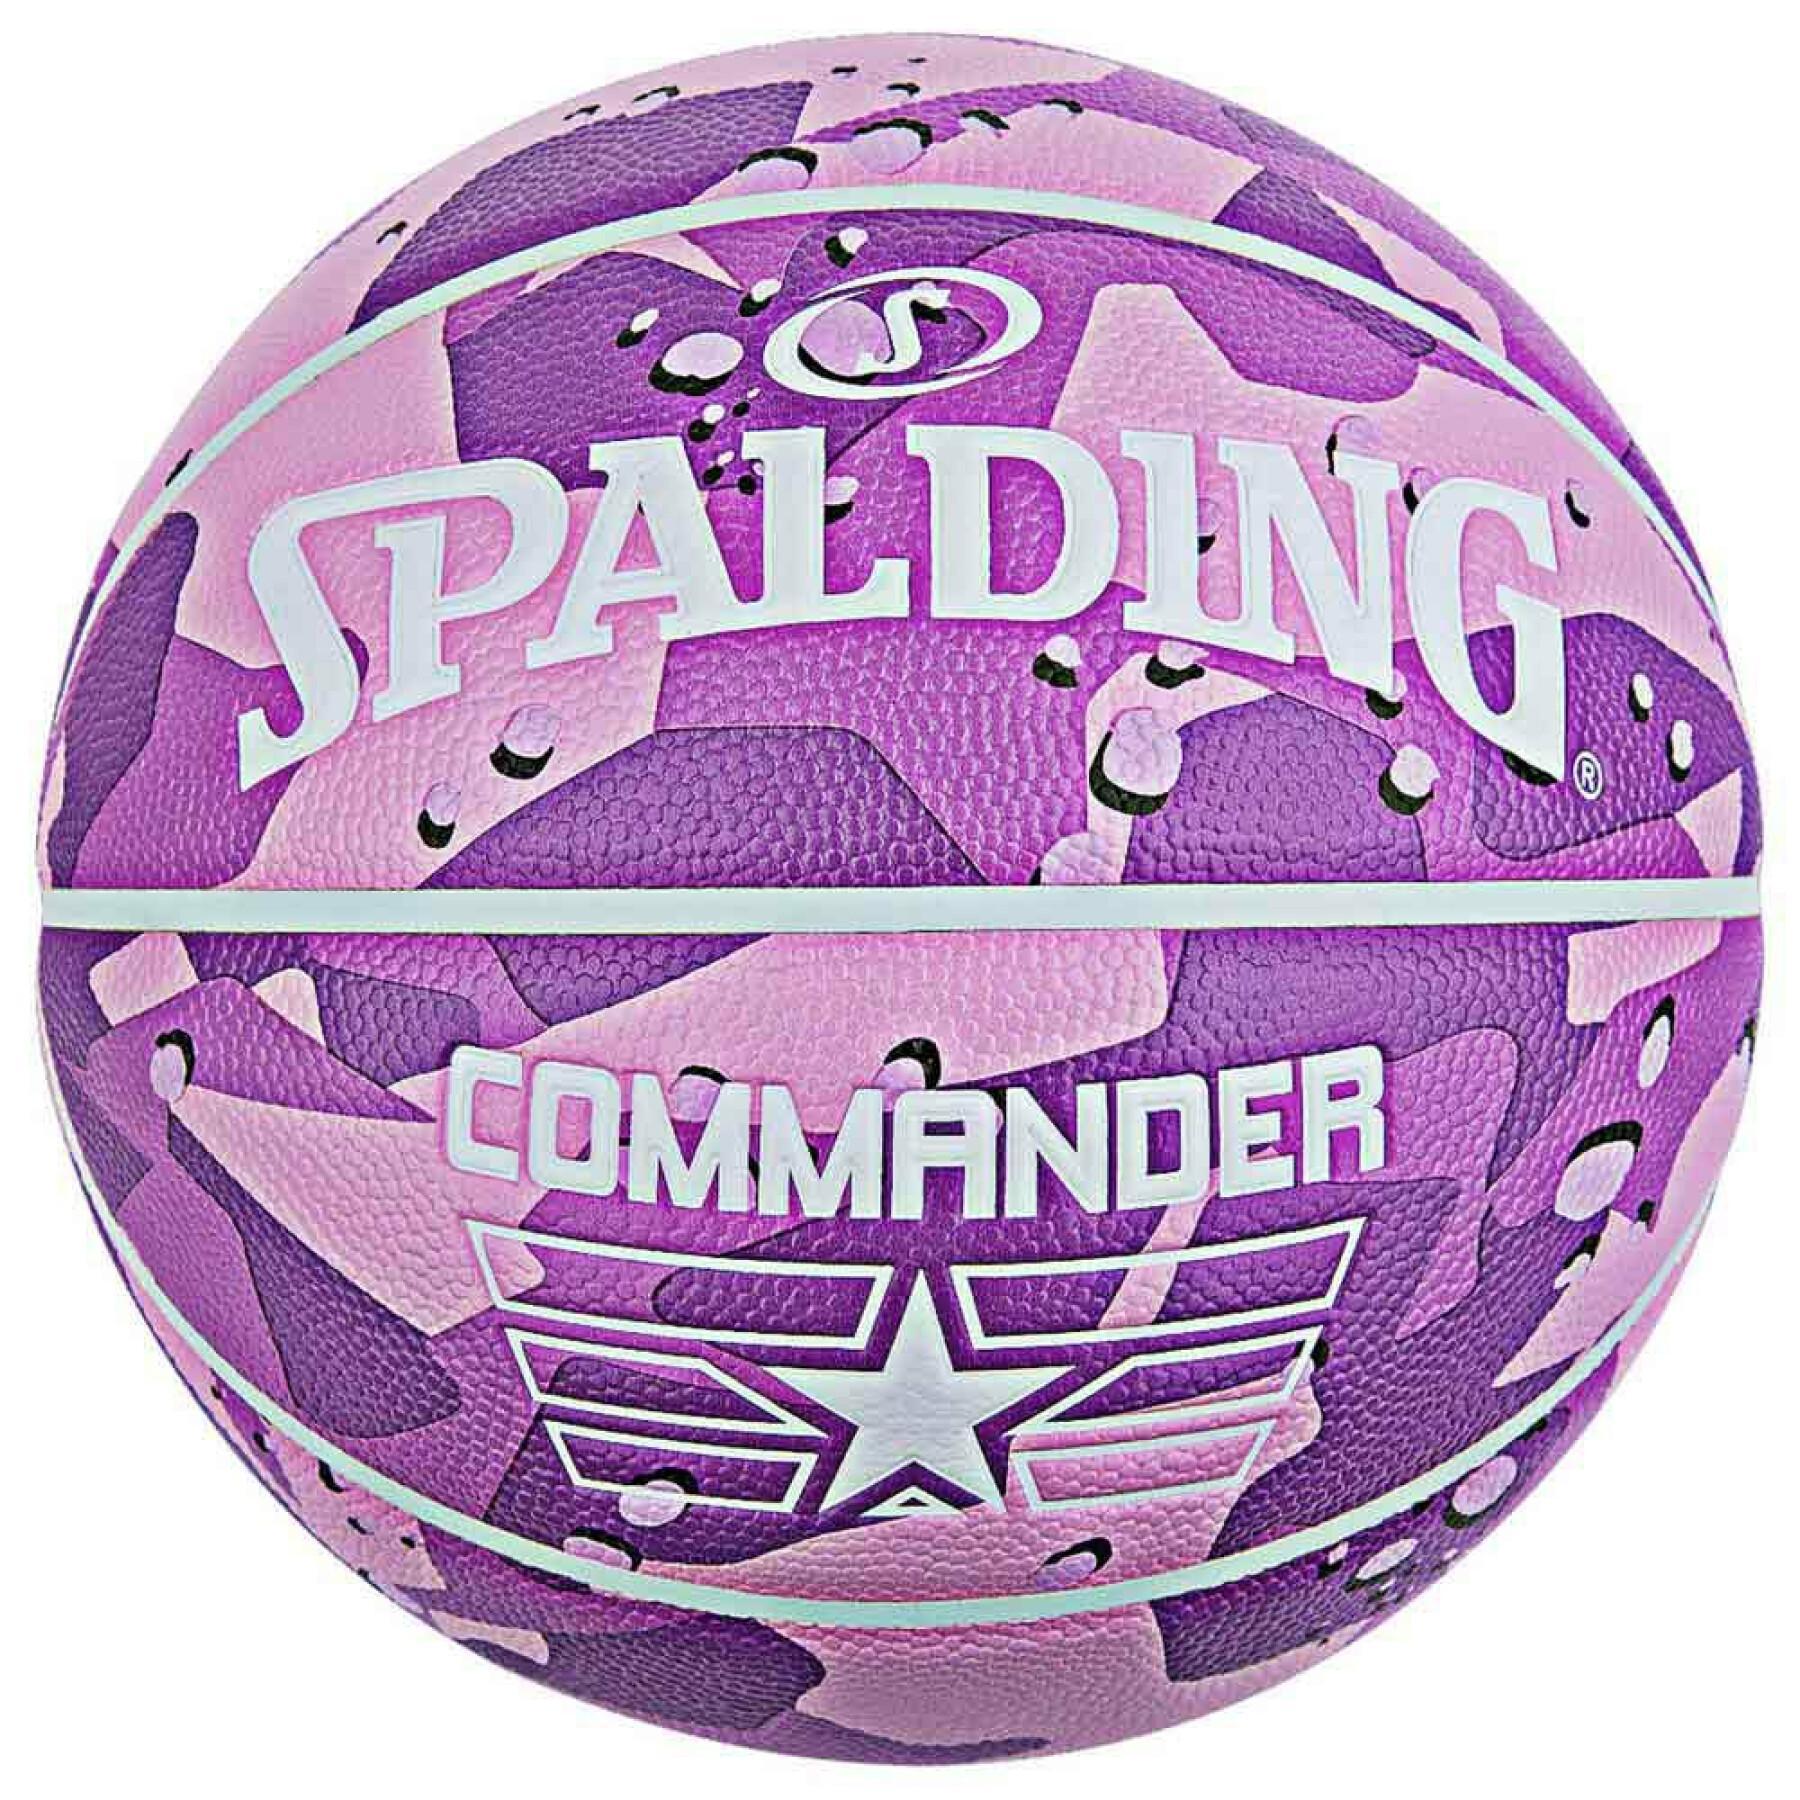 Bola Spalding Commander